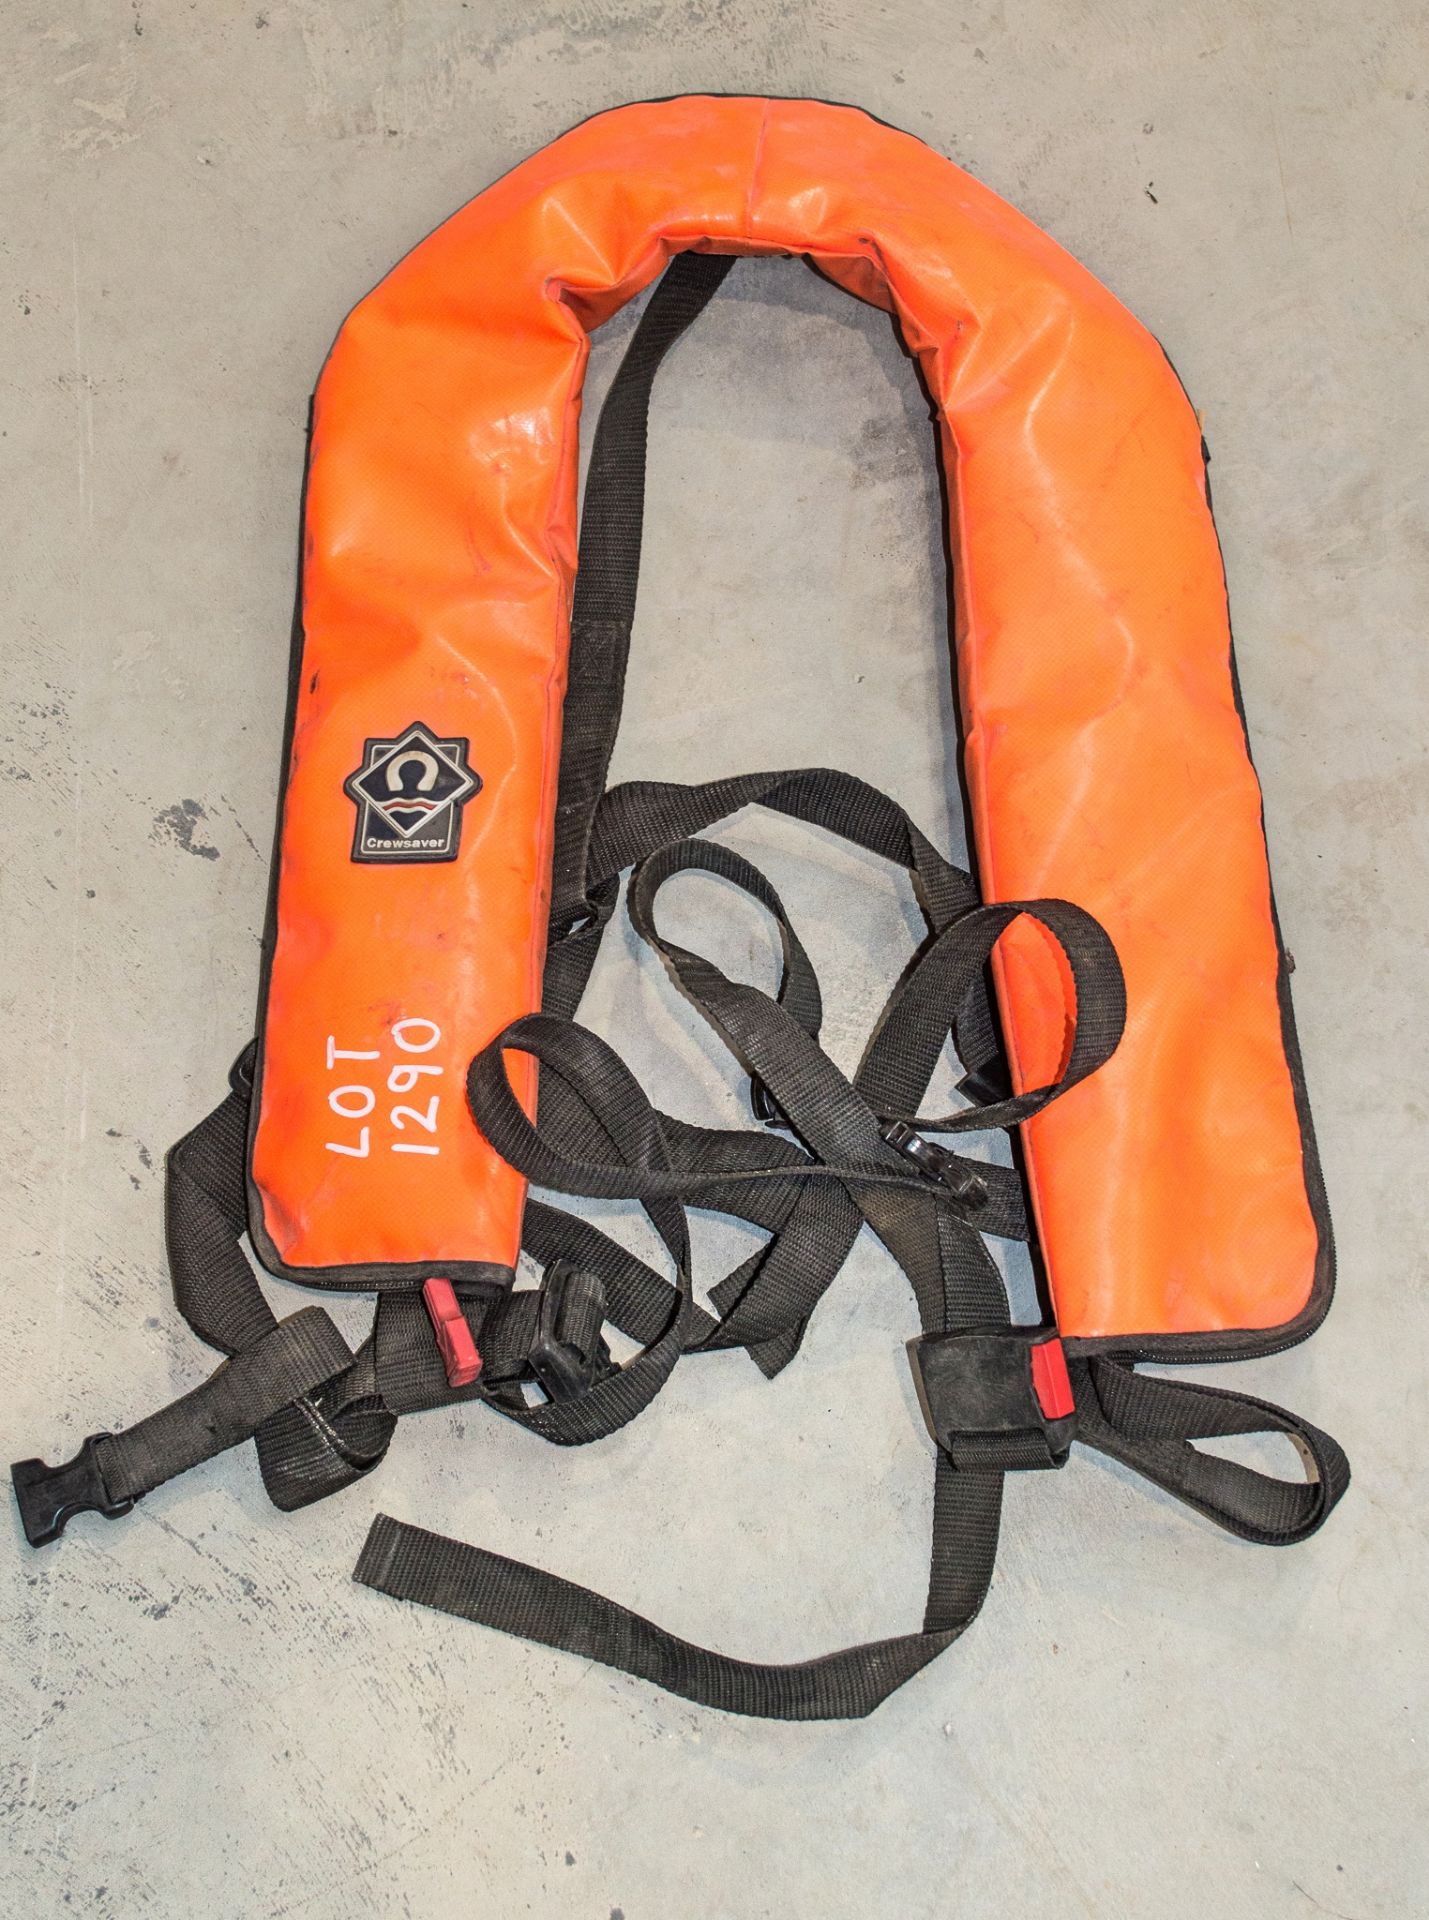 Crewsaver life vest